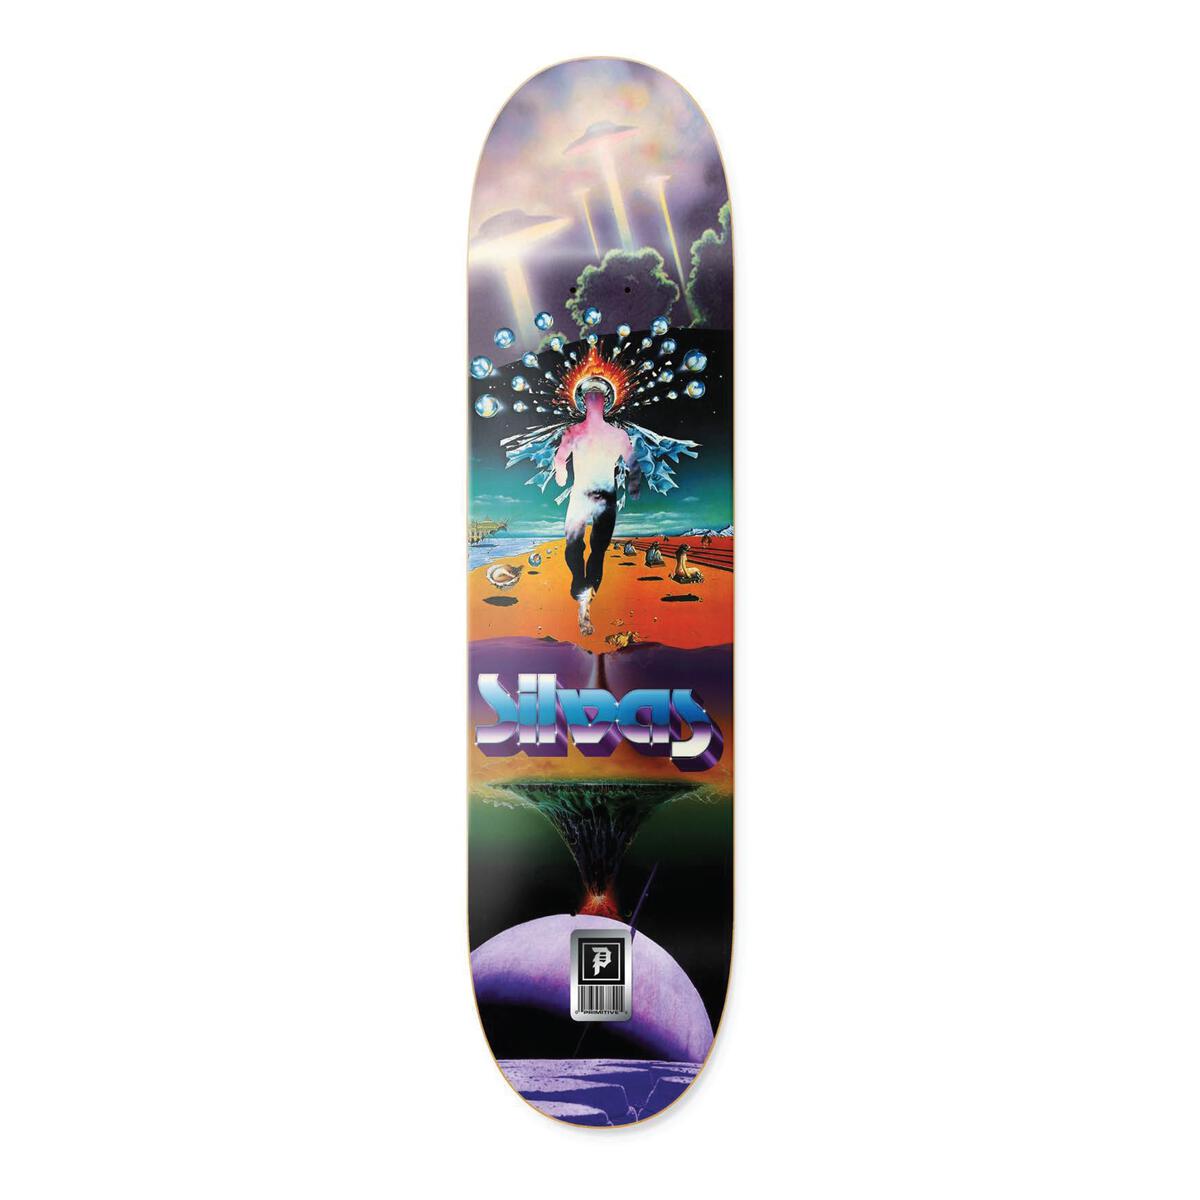 Miles Silvas Time and Space Primitive Skateboard deck